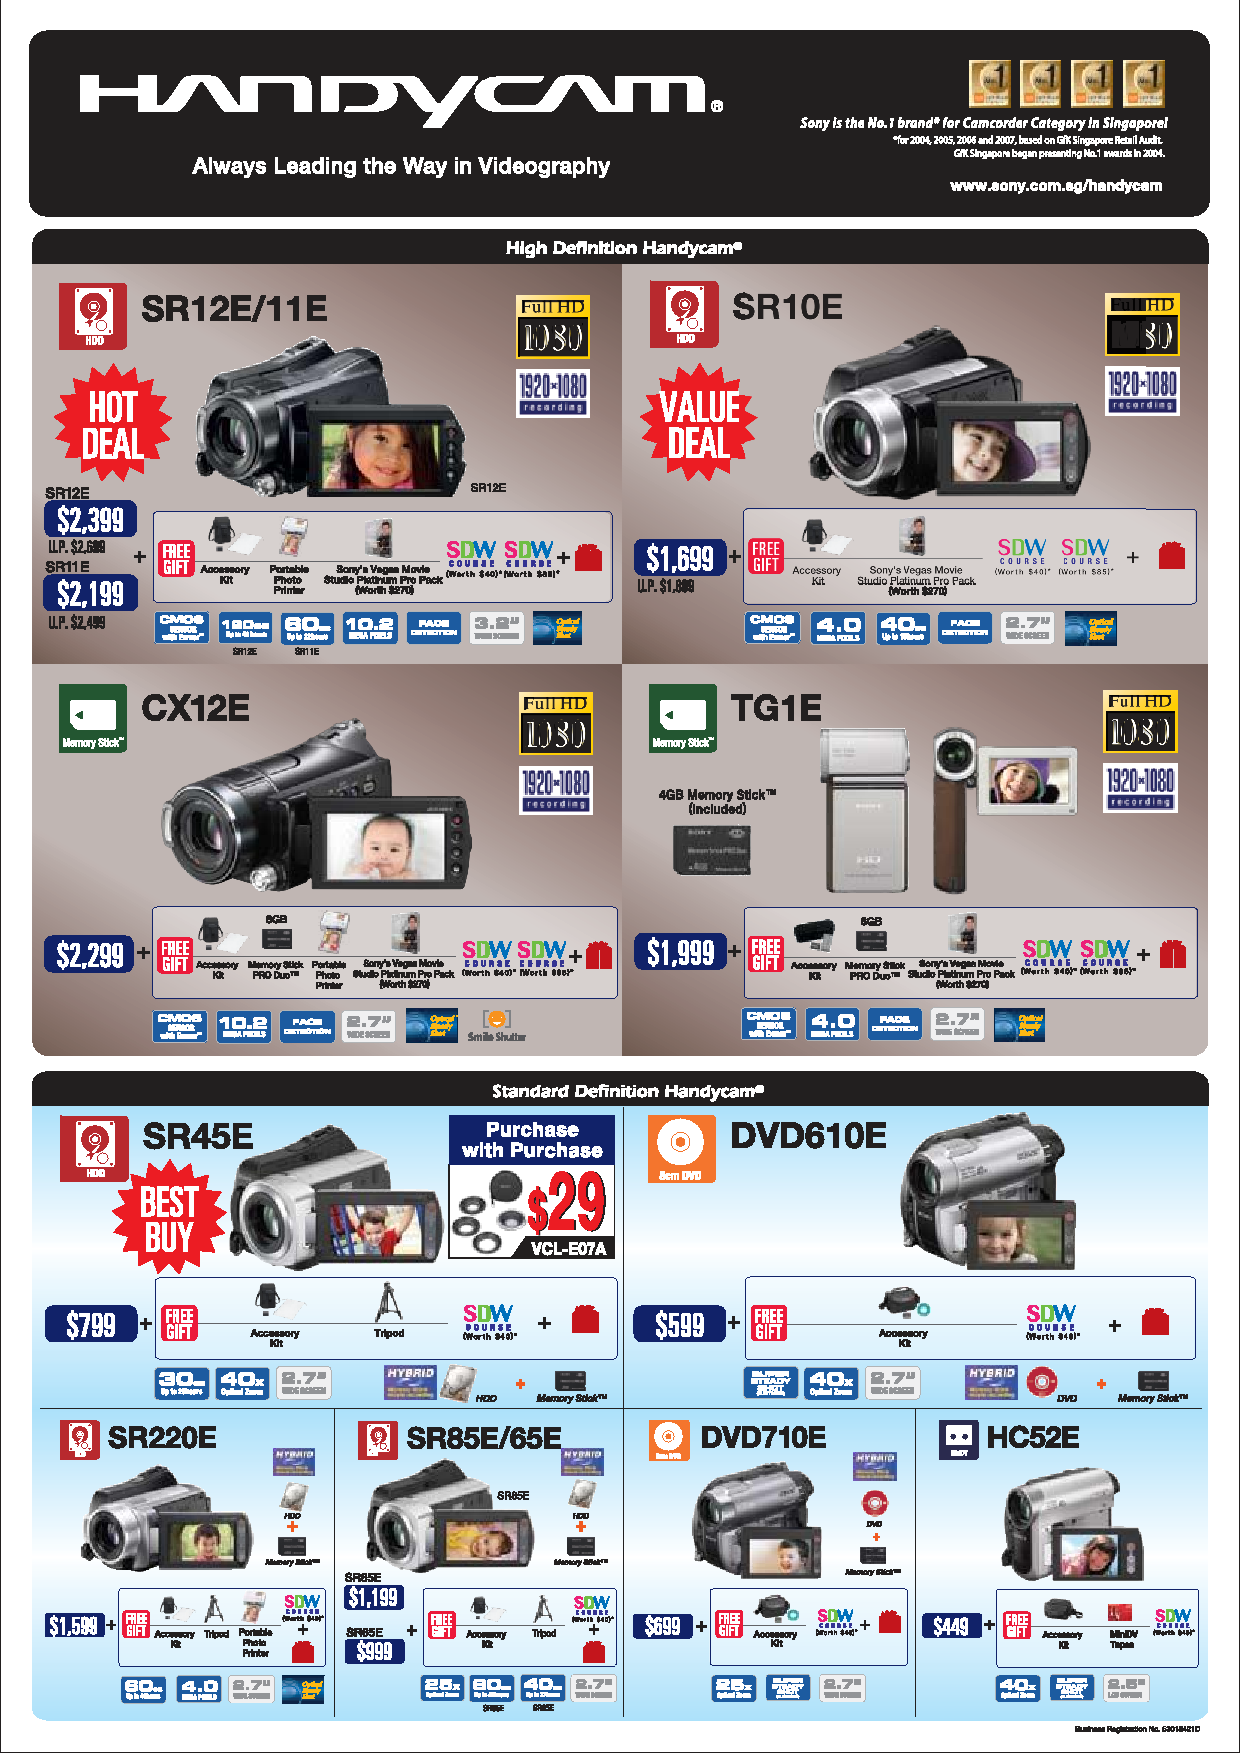 Sitex 2008 price list image brochure of Sony Handycam